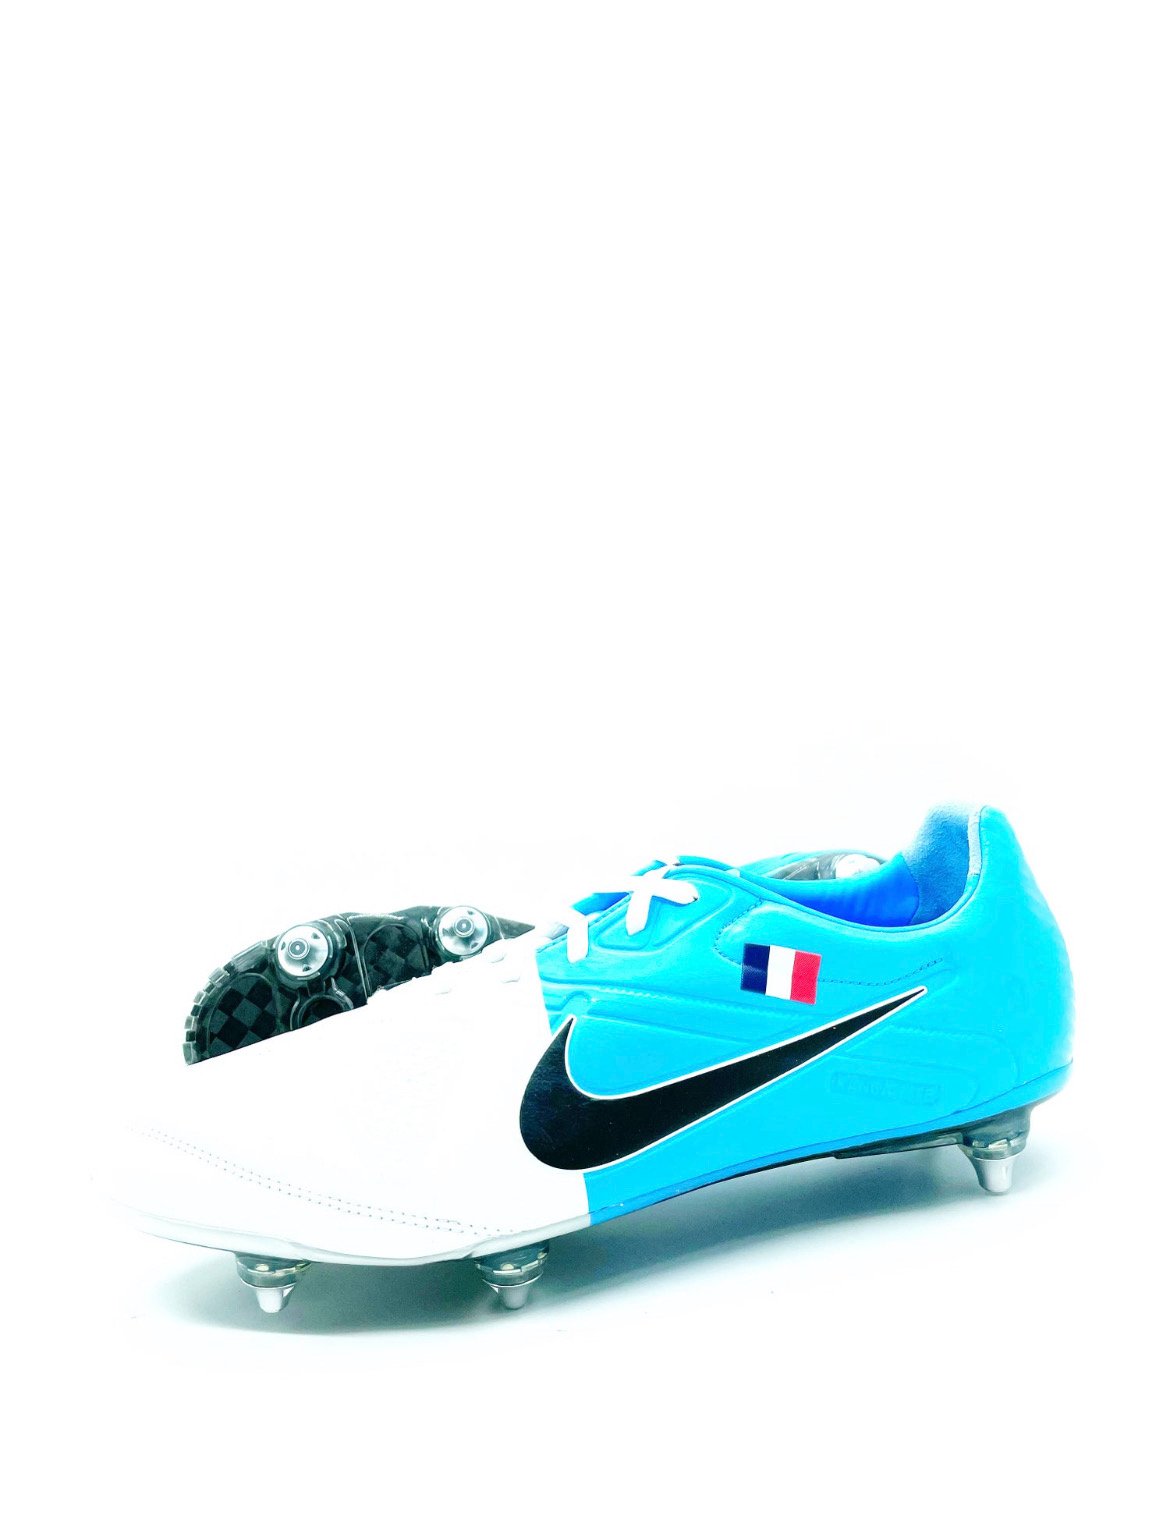 Image of Nike Ctr360 Elite SG white/blue 